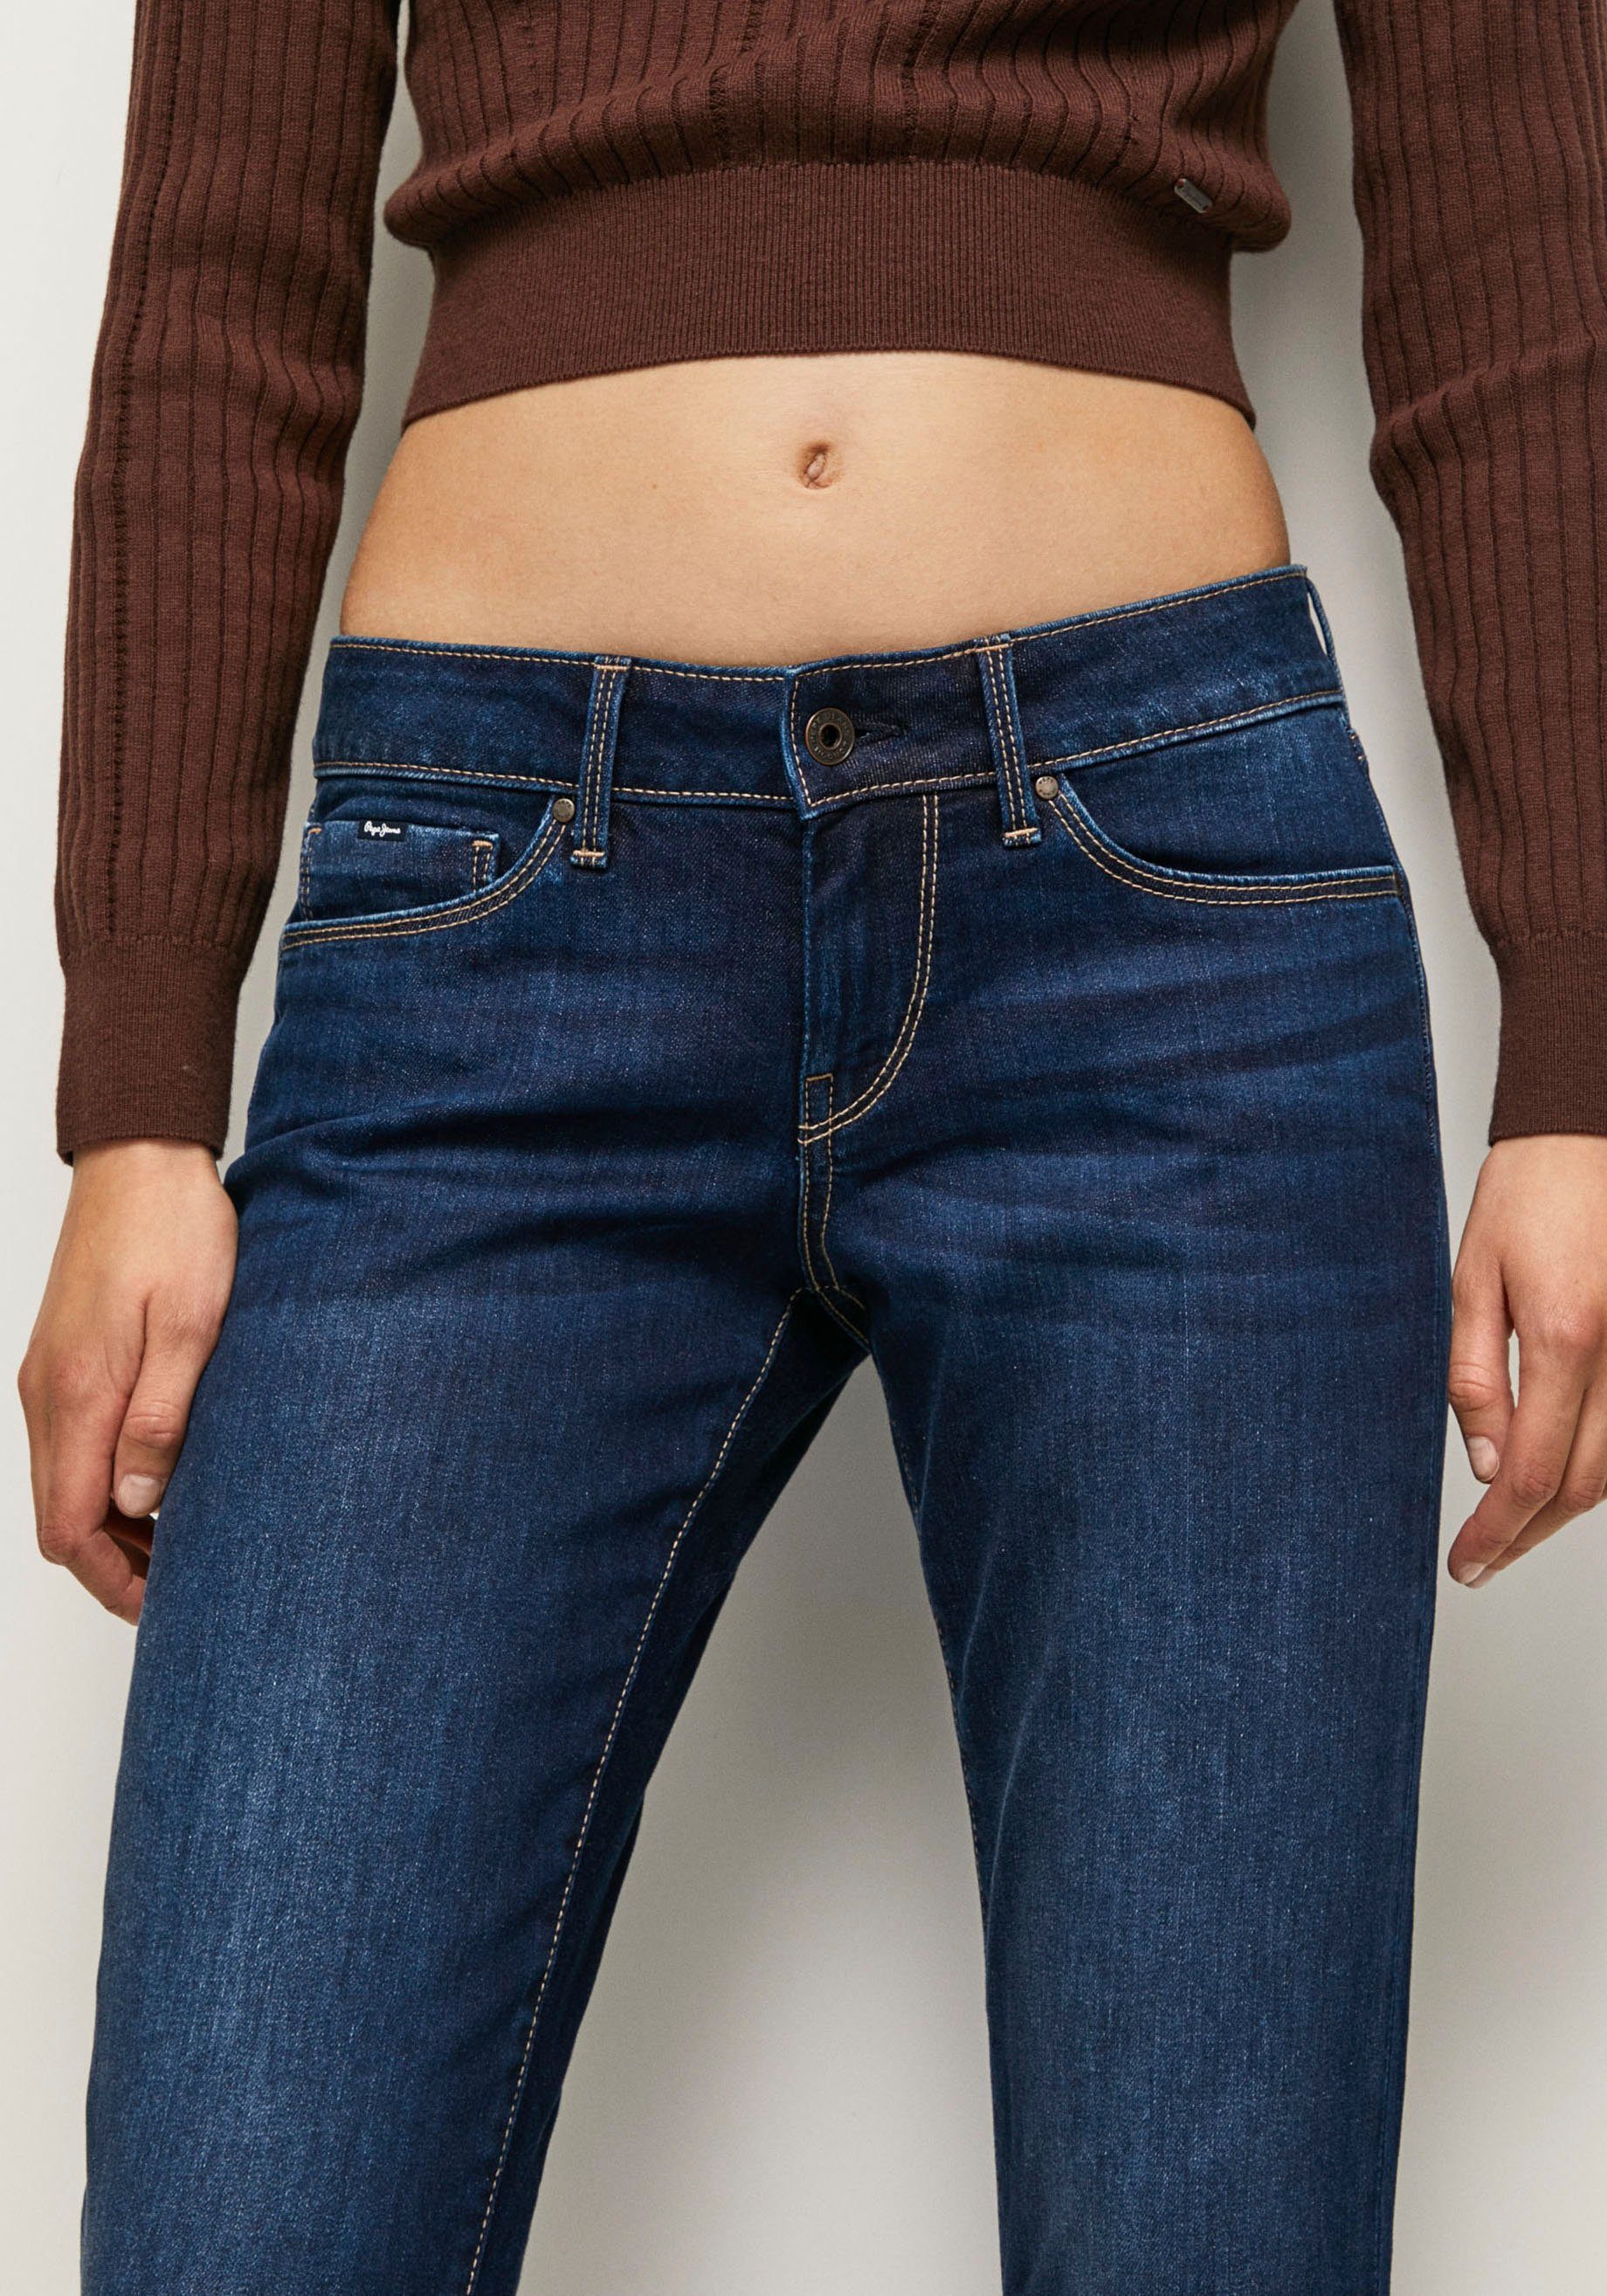 Pepe Jeans Skinny-fit-Jeans SOHO im Bund Stretch-Anteil 1-Knopf DARK USED und mit 5-Pocket-Stil